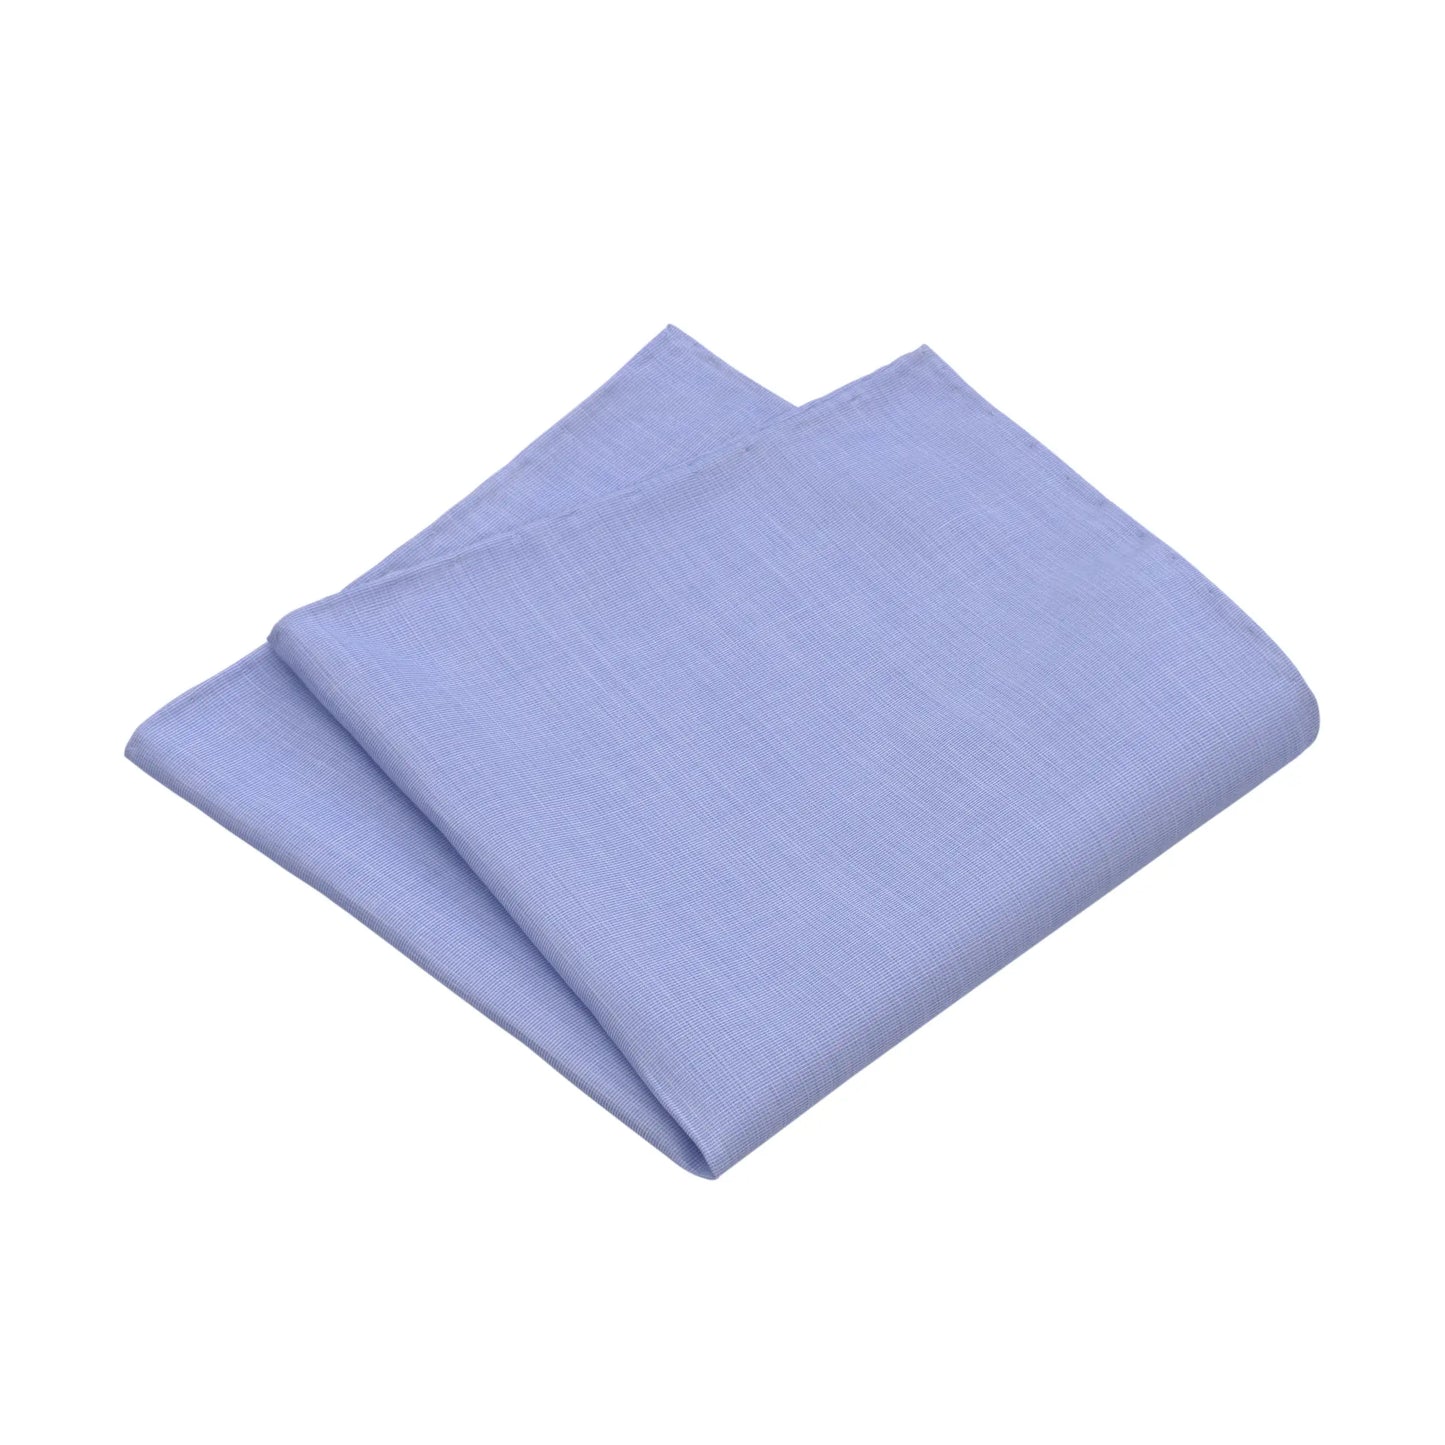 Cotton Pocket Square in Light Blue